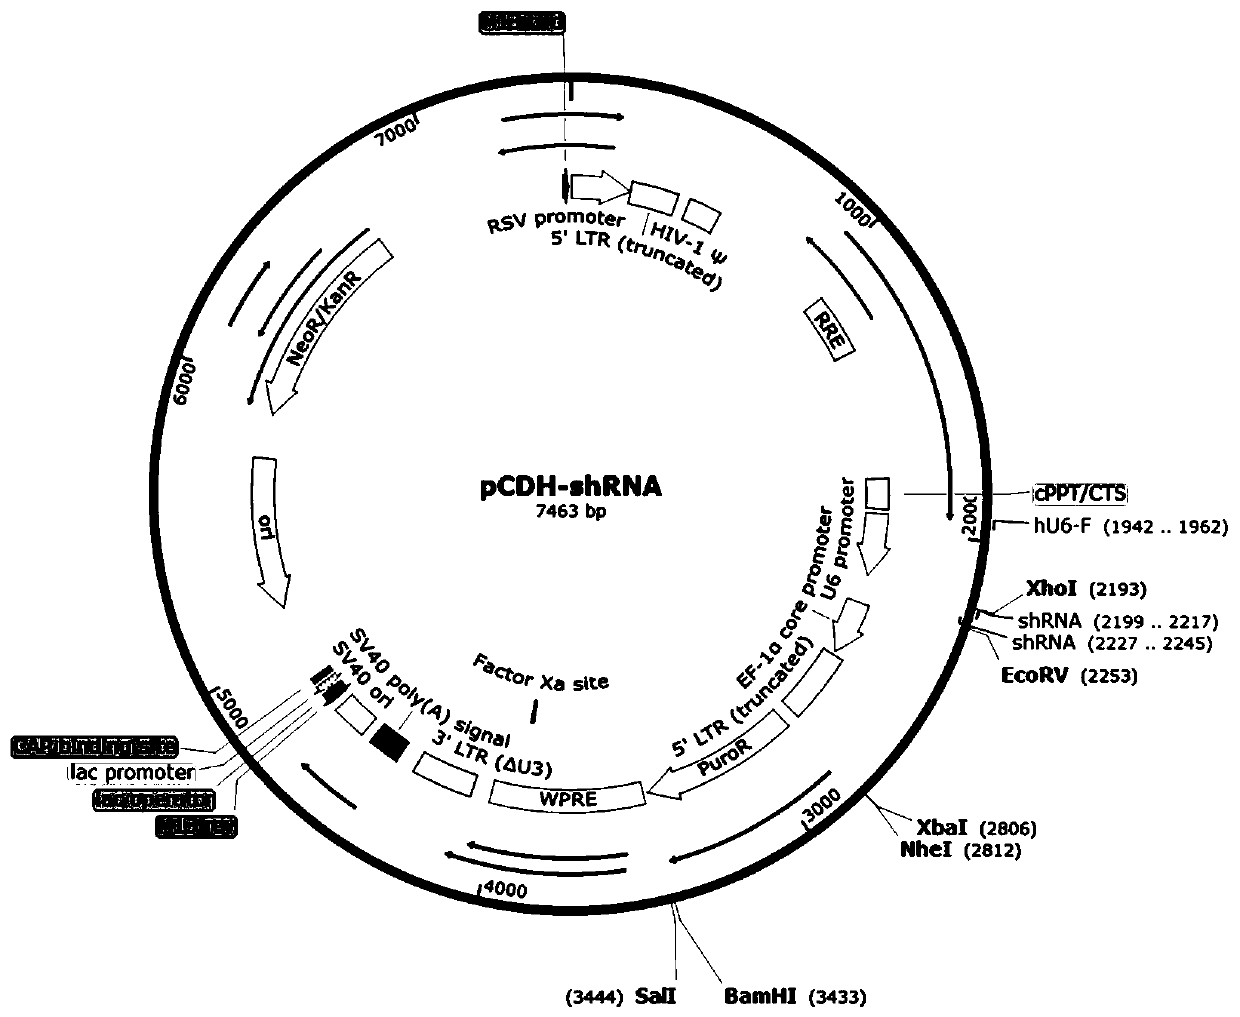 ShRNA of CXCR4 gene and application of shRNA